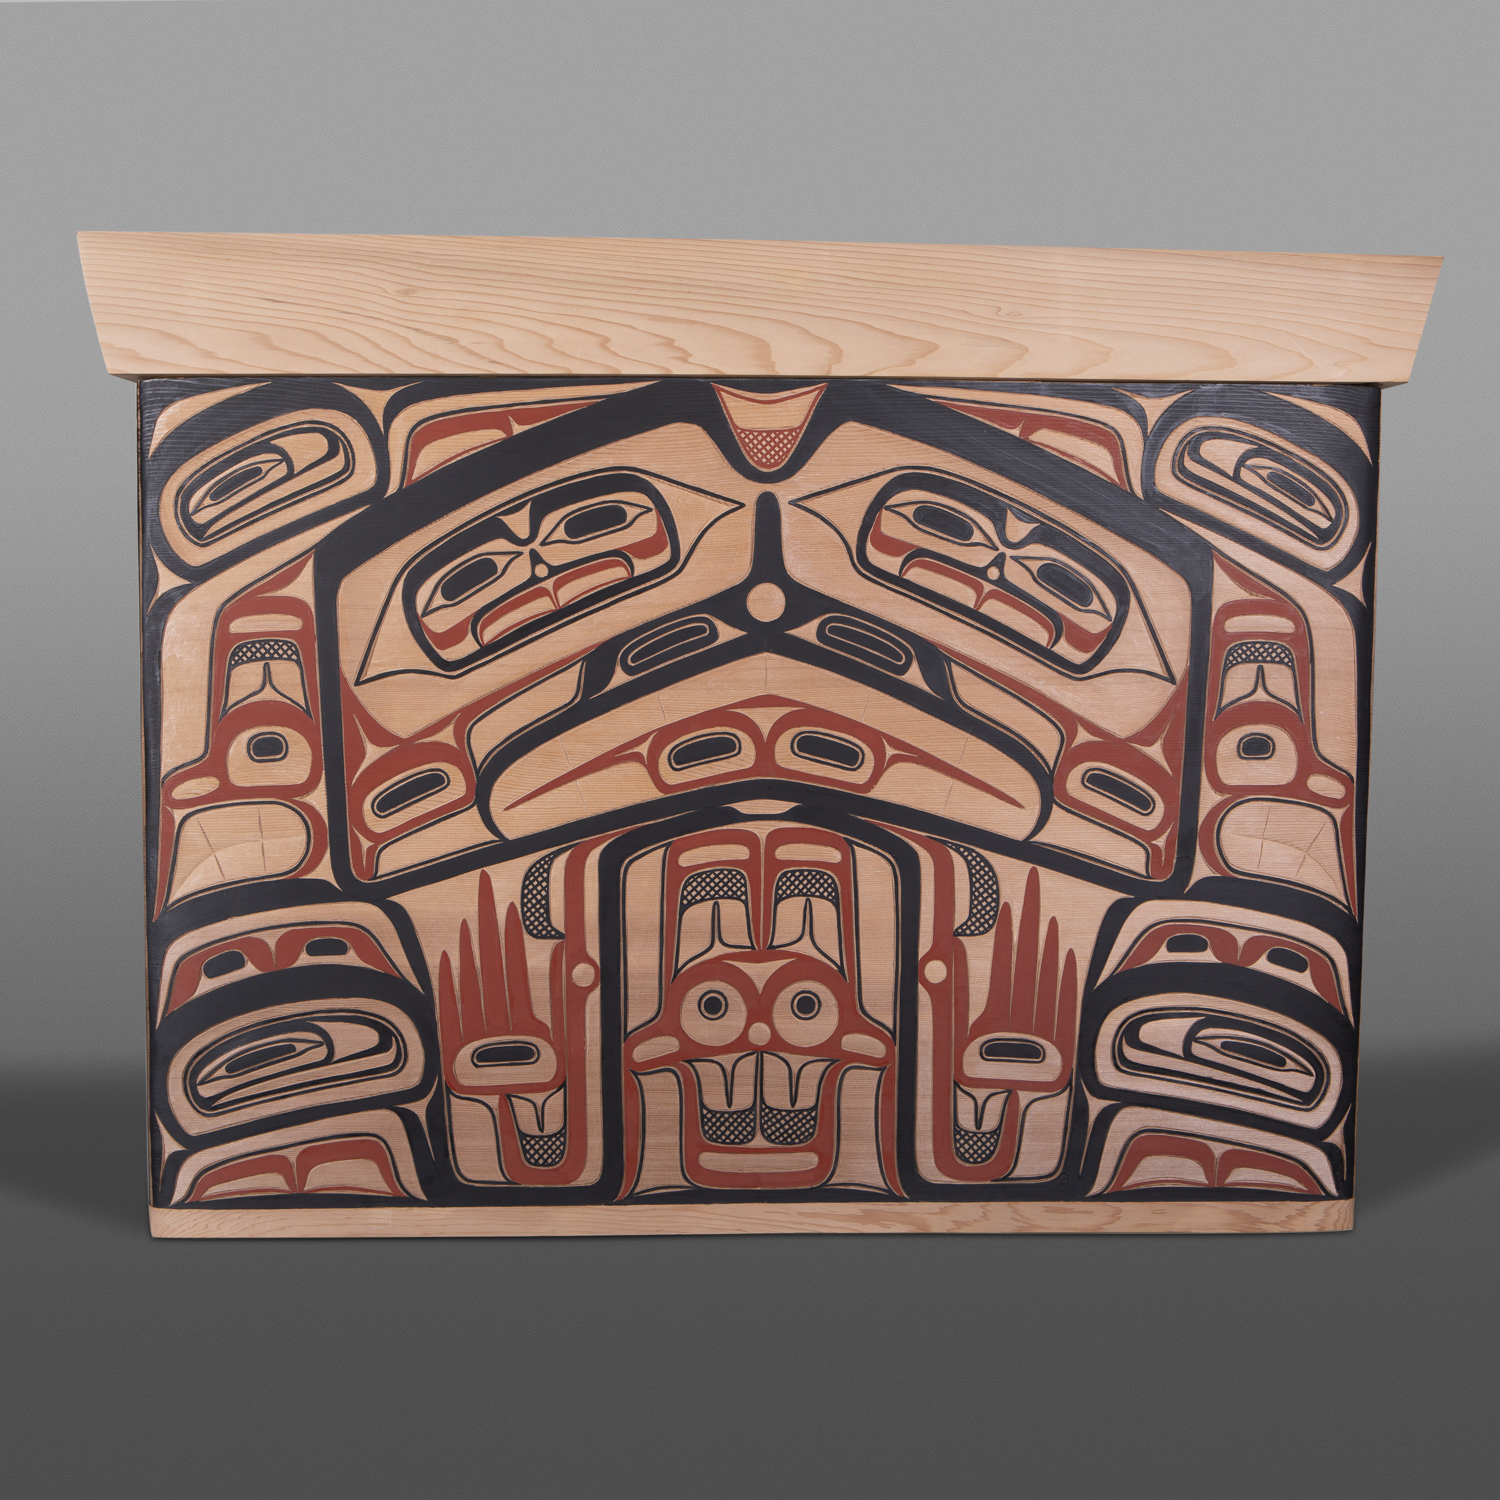 Eagle & Bear Chief's Chest
David Boxley
Tsimshian
Red cedar, paint
26" x 18½" x 34½"
$25,000